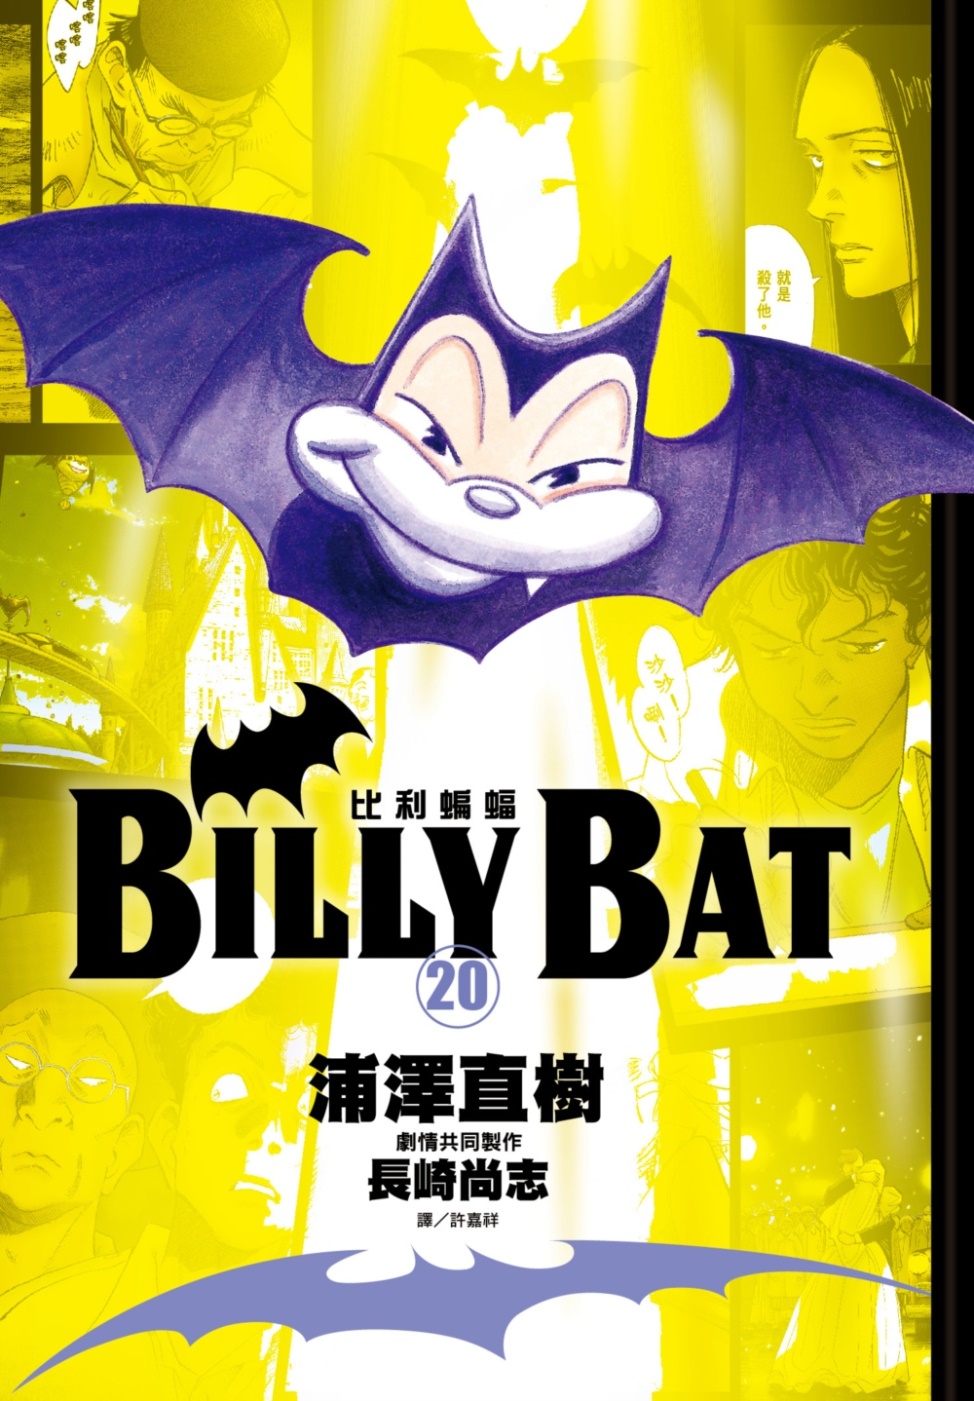 BILLY BAT比利蝙蝠(20)完